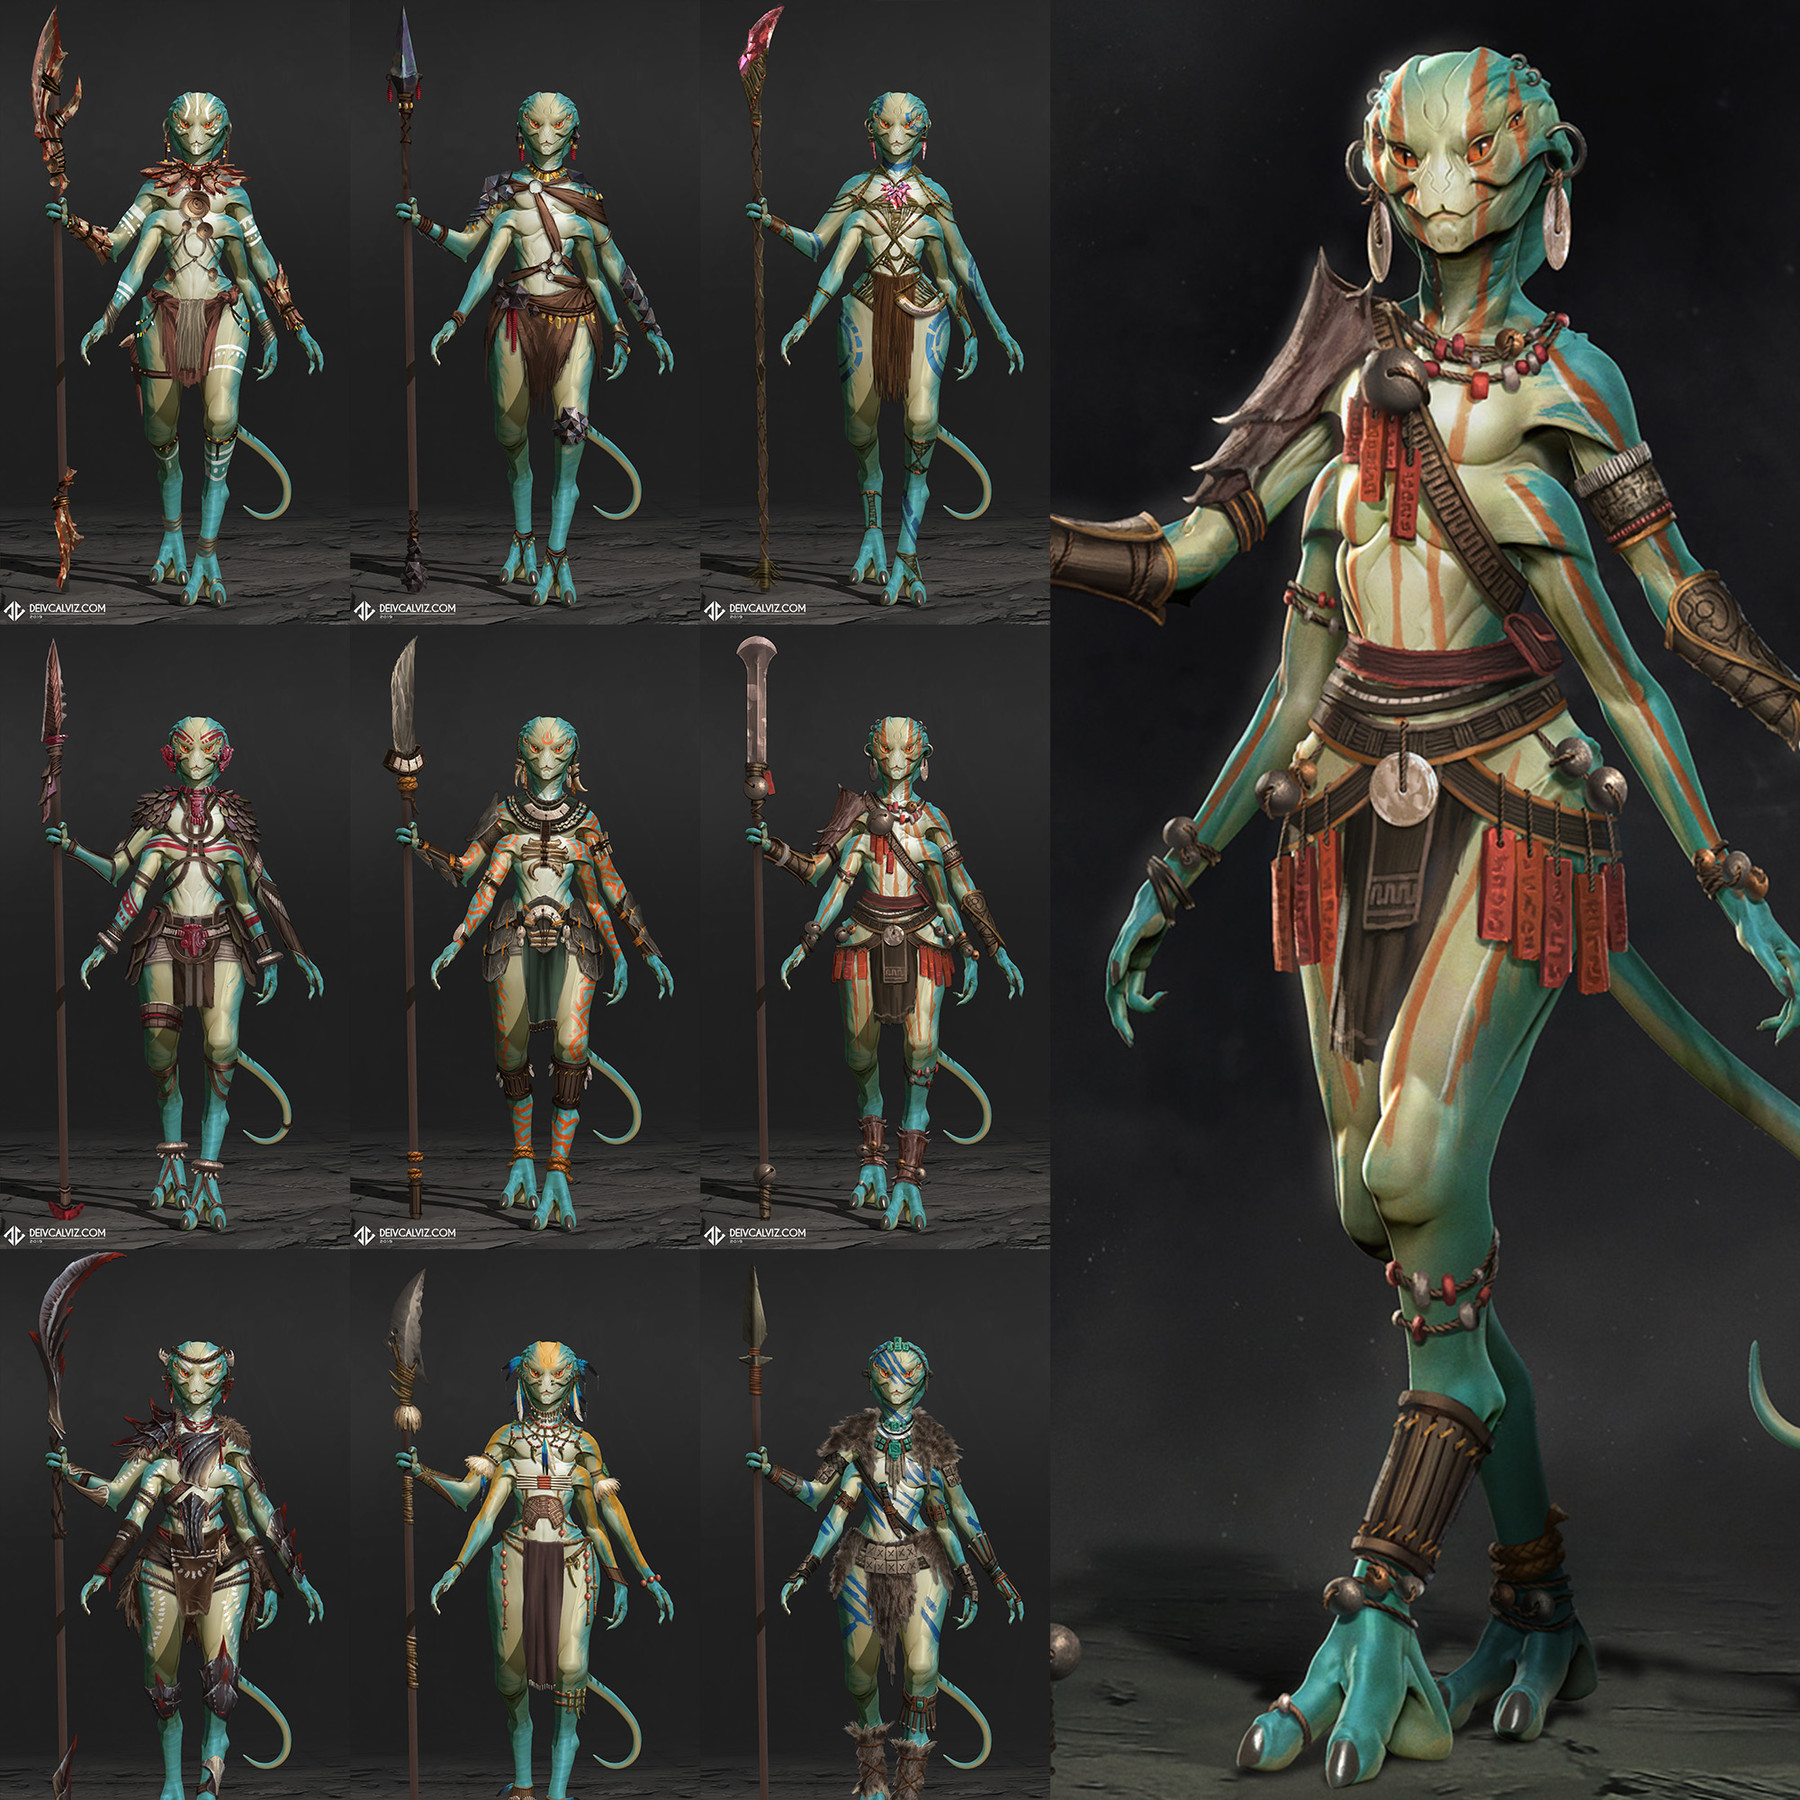 ArtStation - Alien Character Concept Art - Developing an Alien Tribe ...